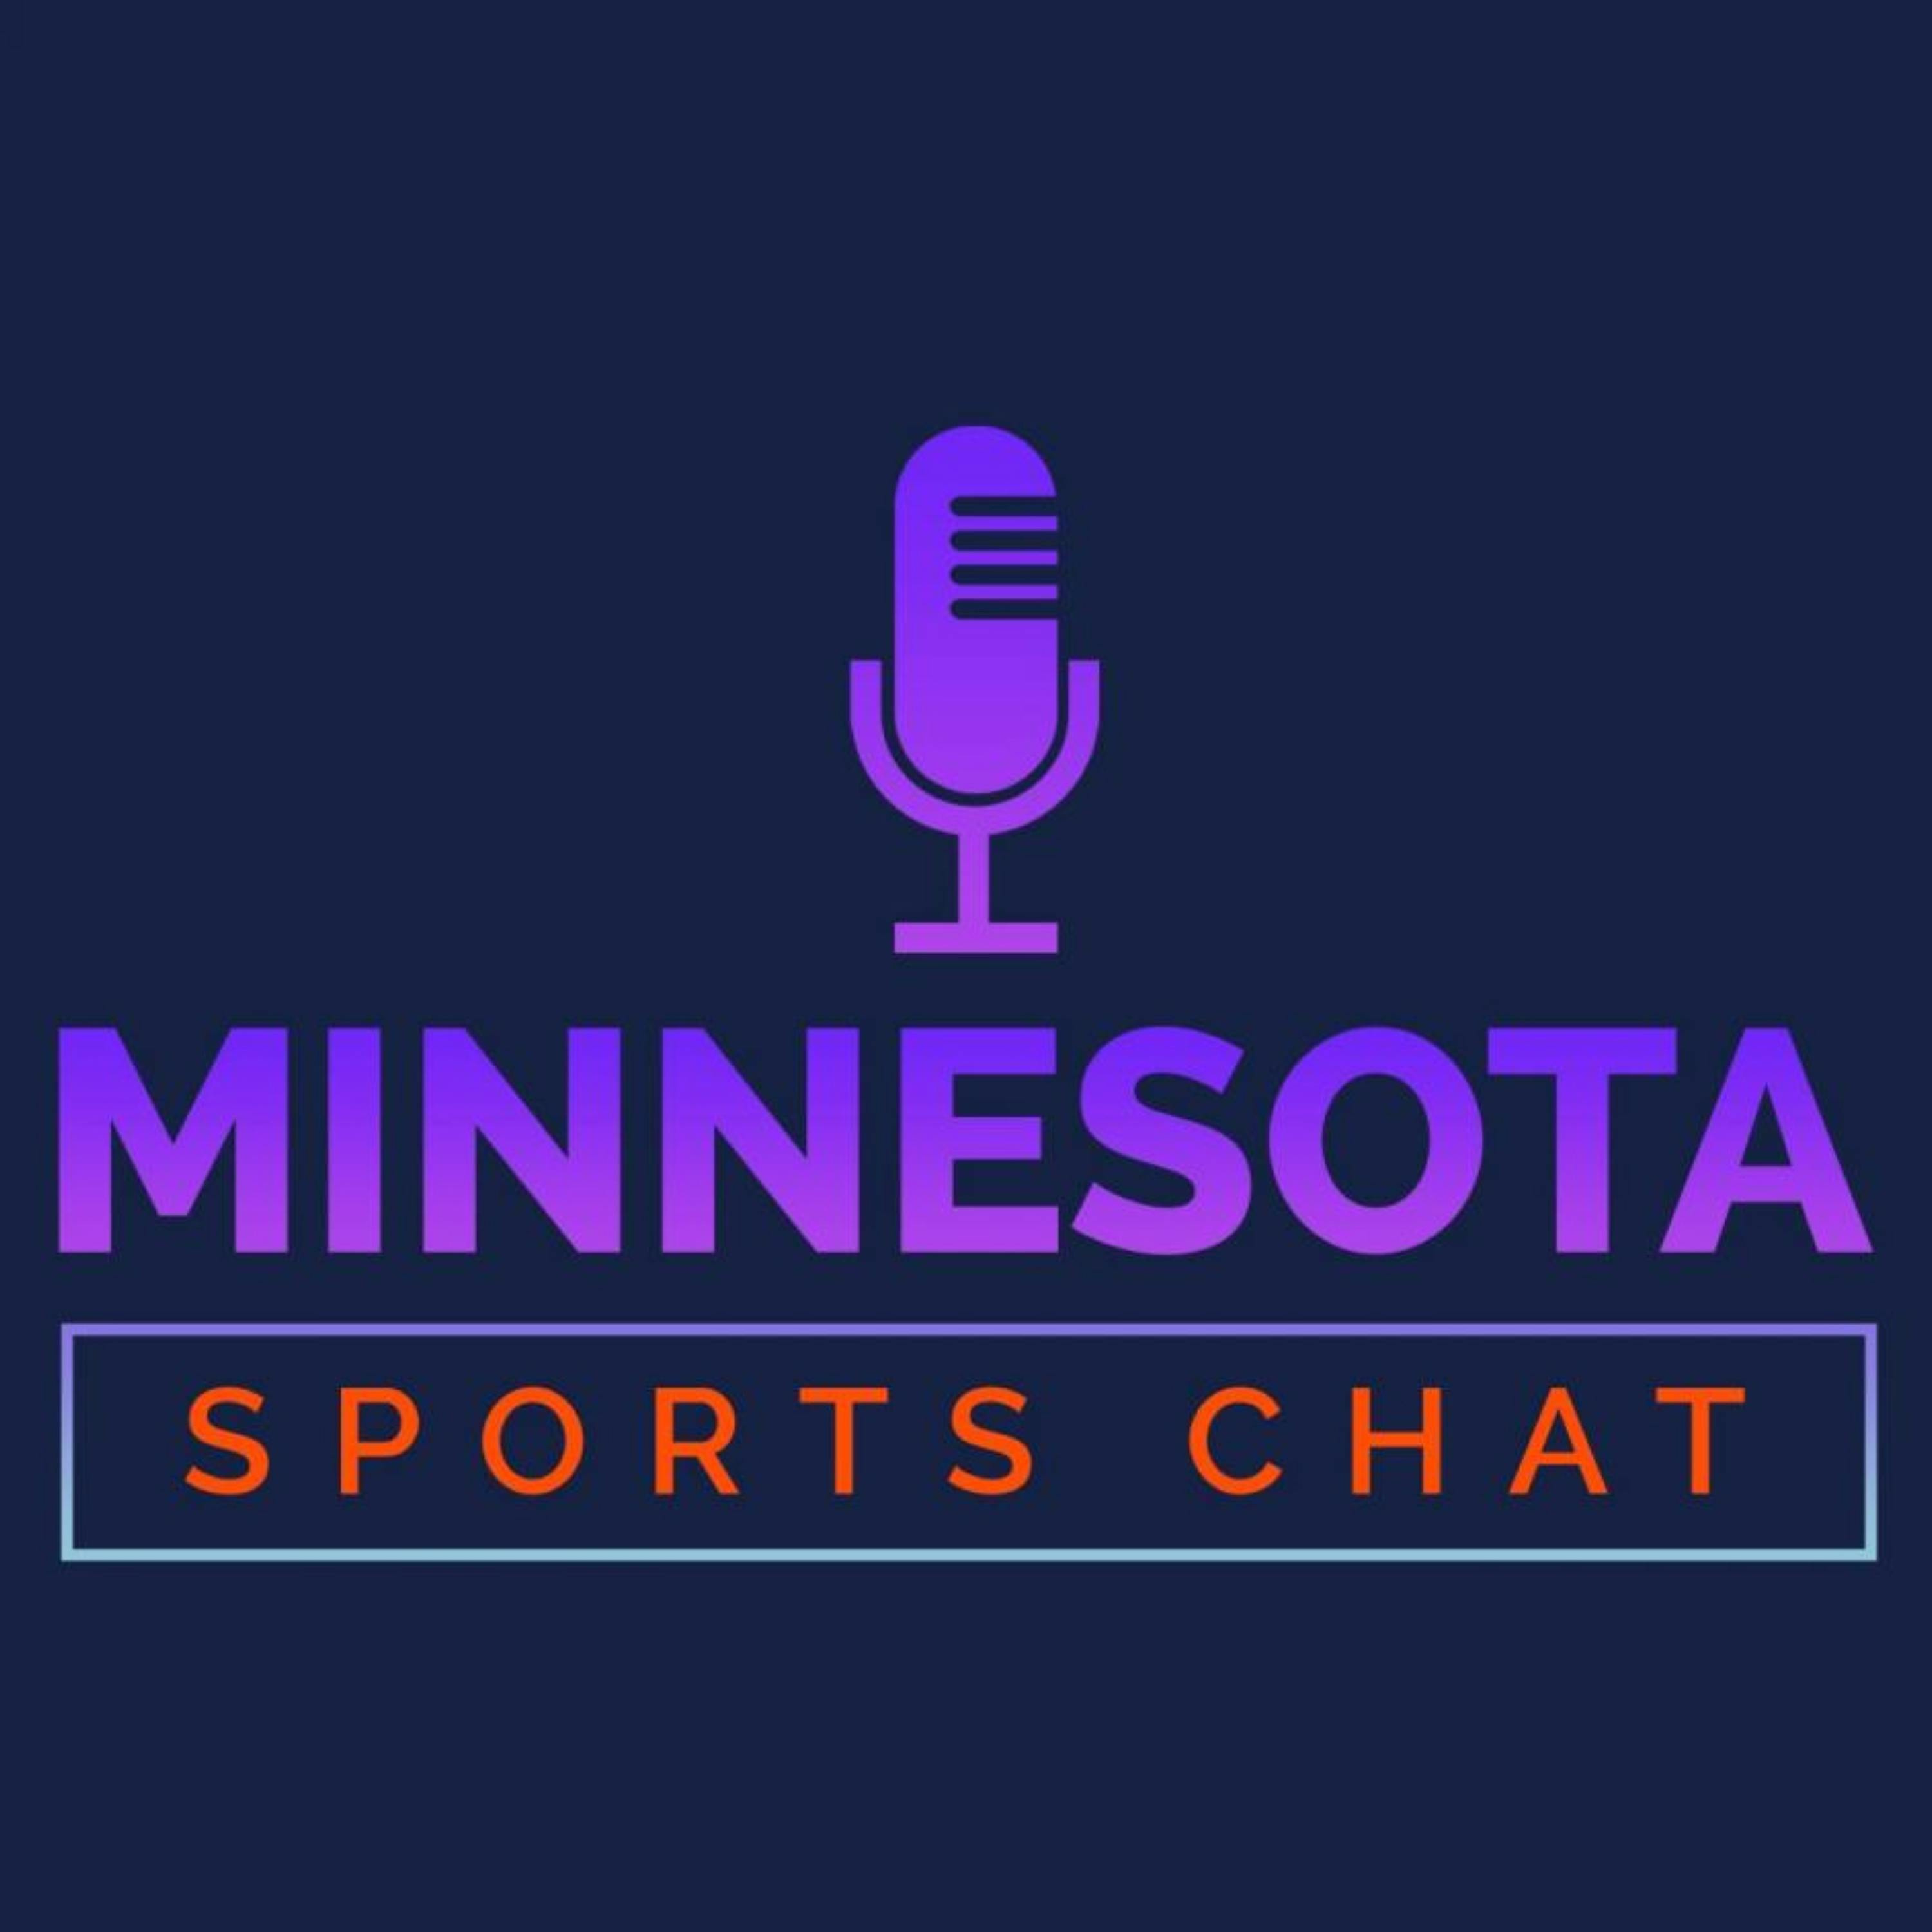 Minnesota Vikings and Minnesota Wild playoff prospects